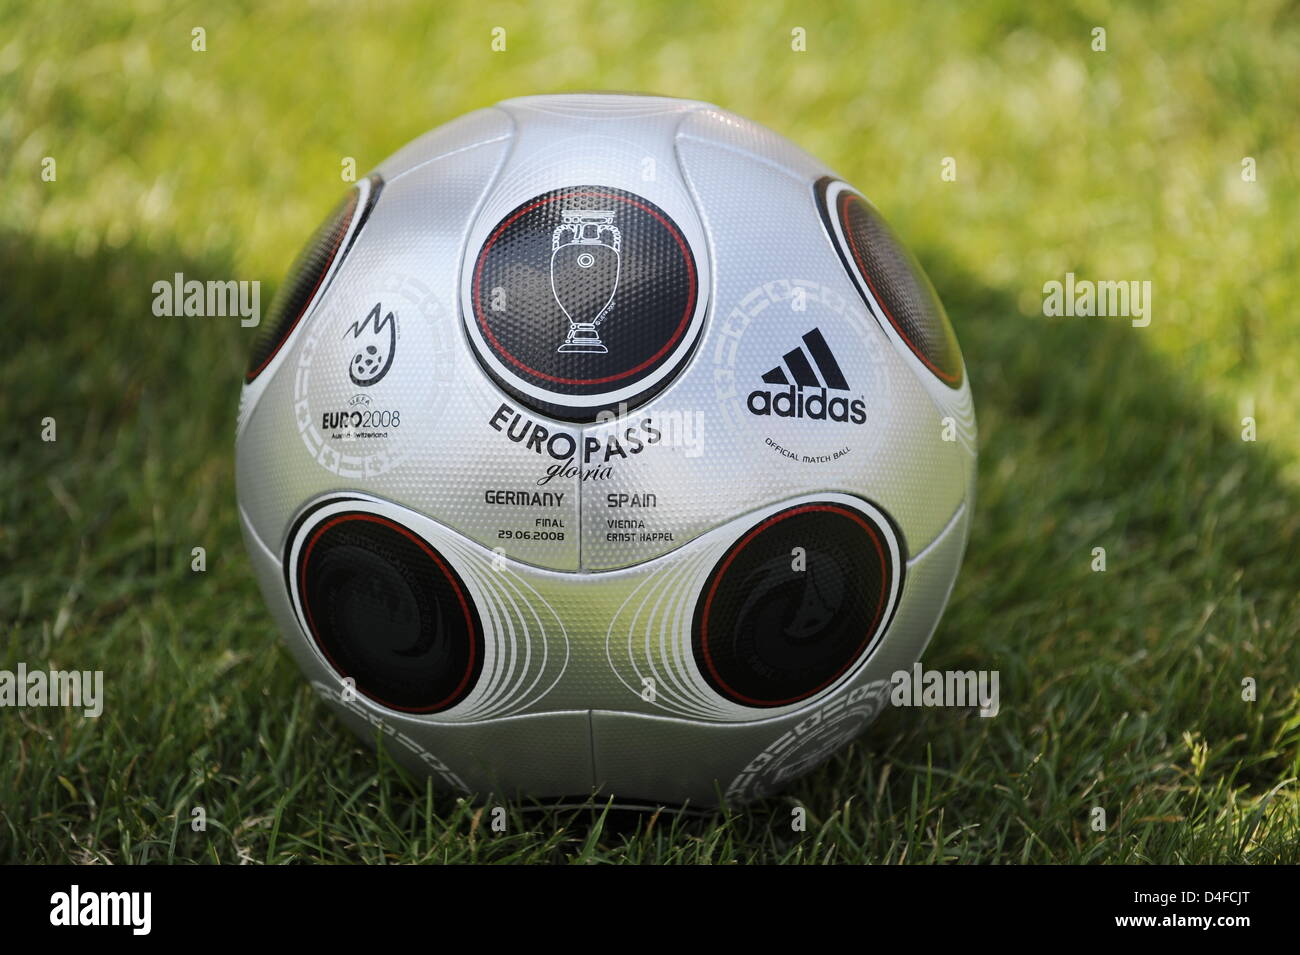 euro 2008 match ball